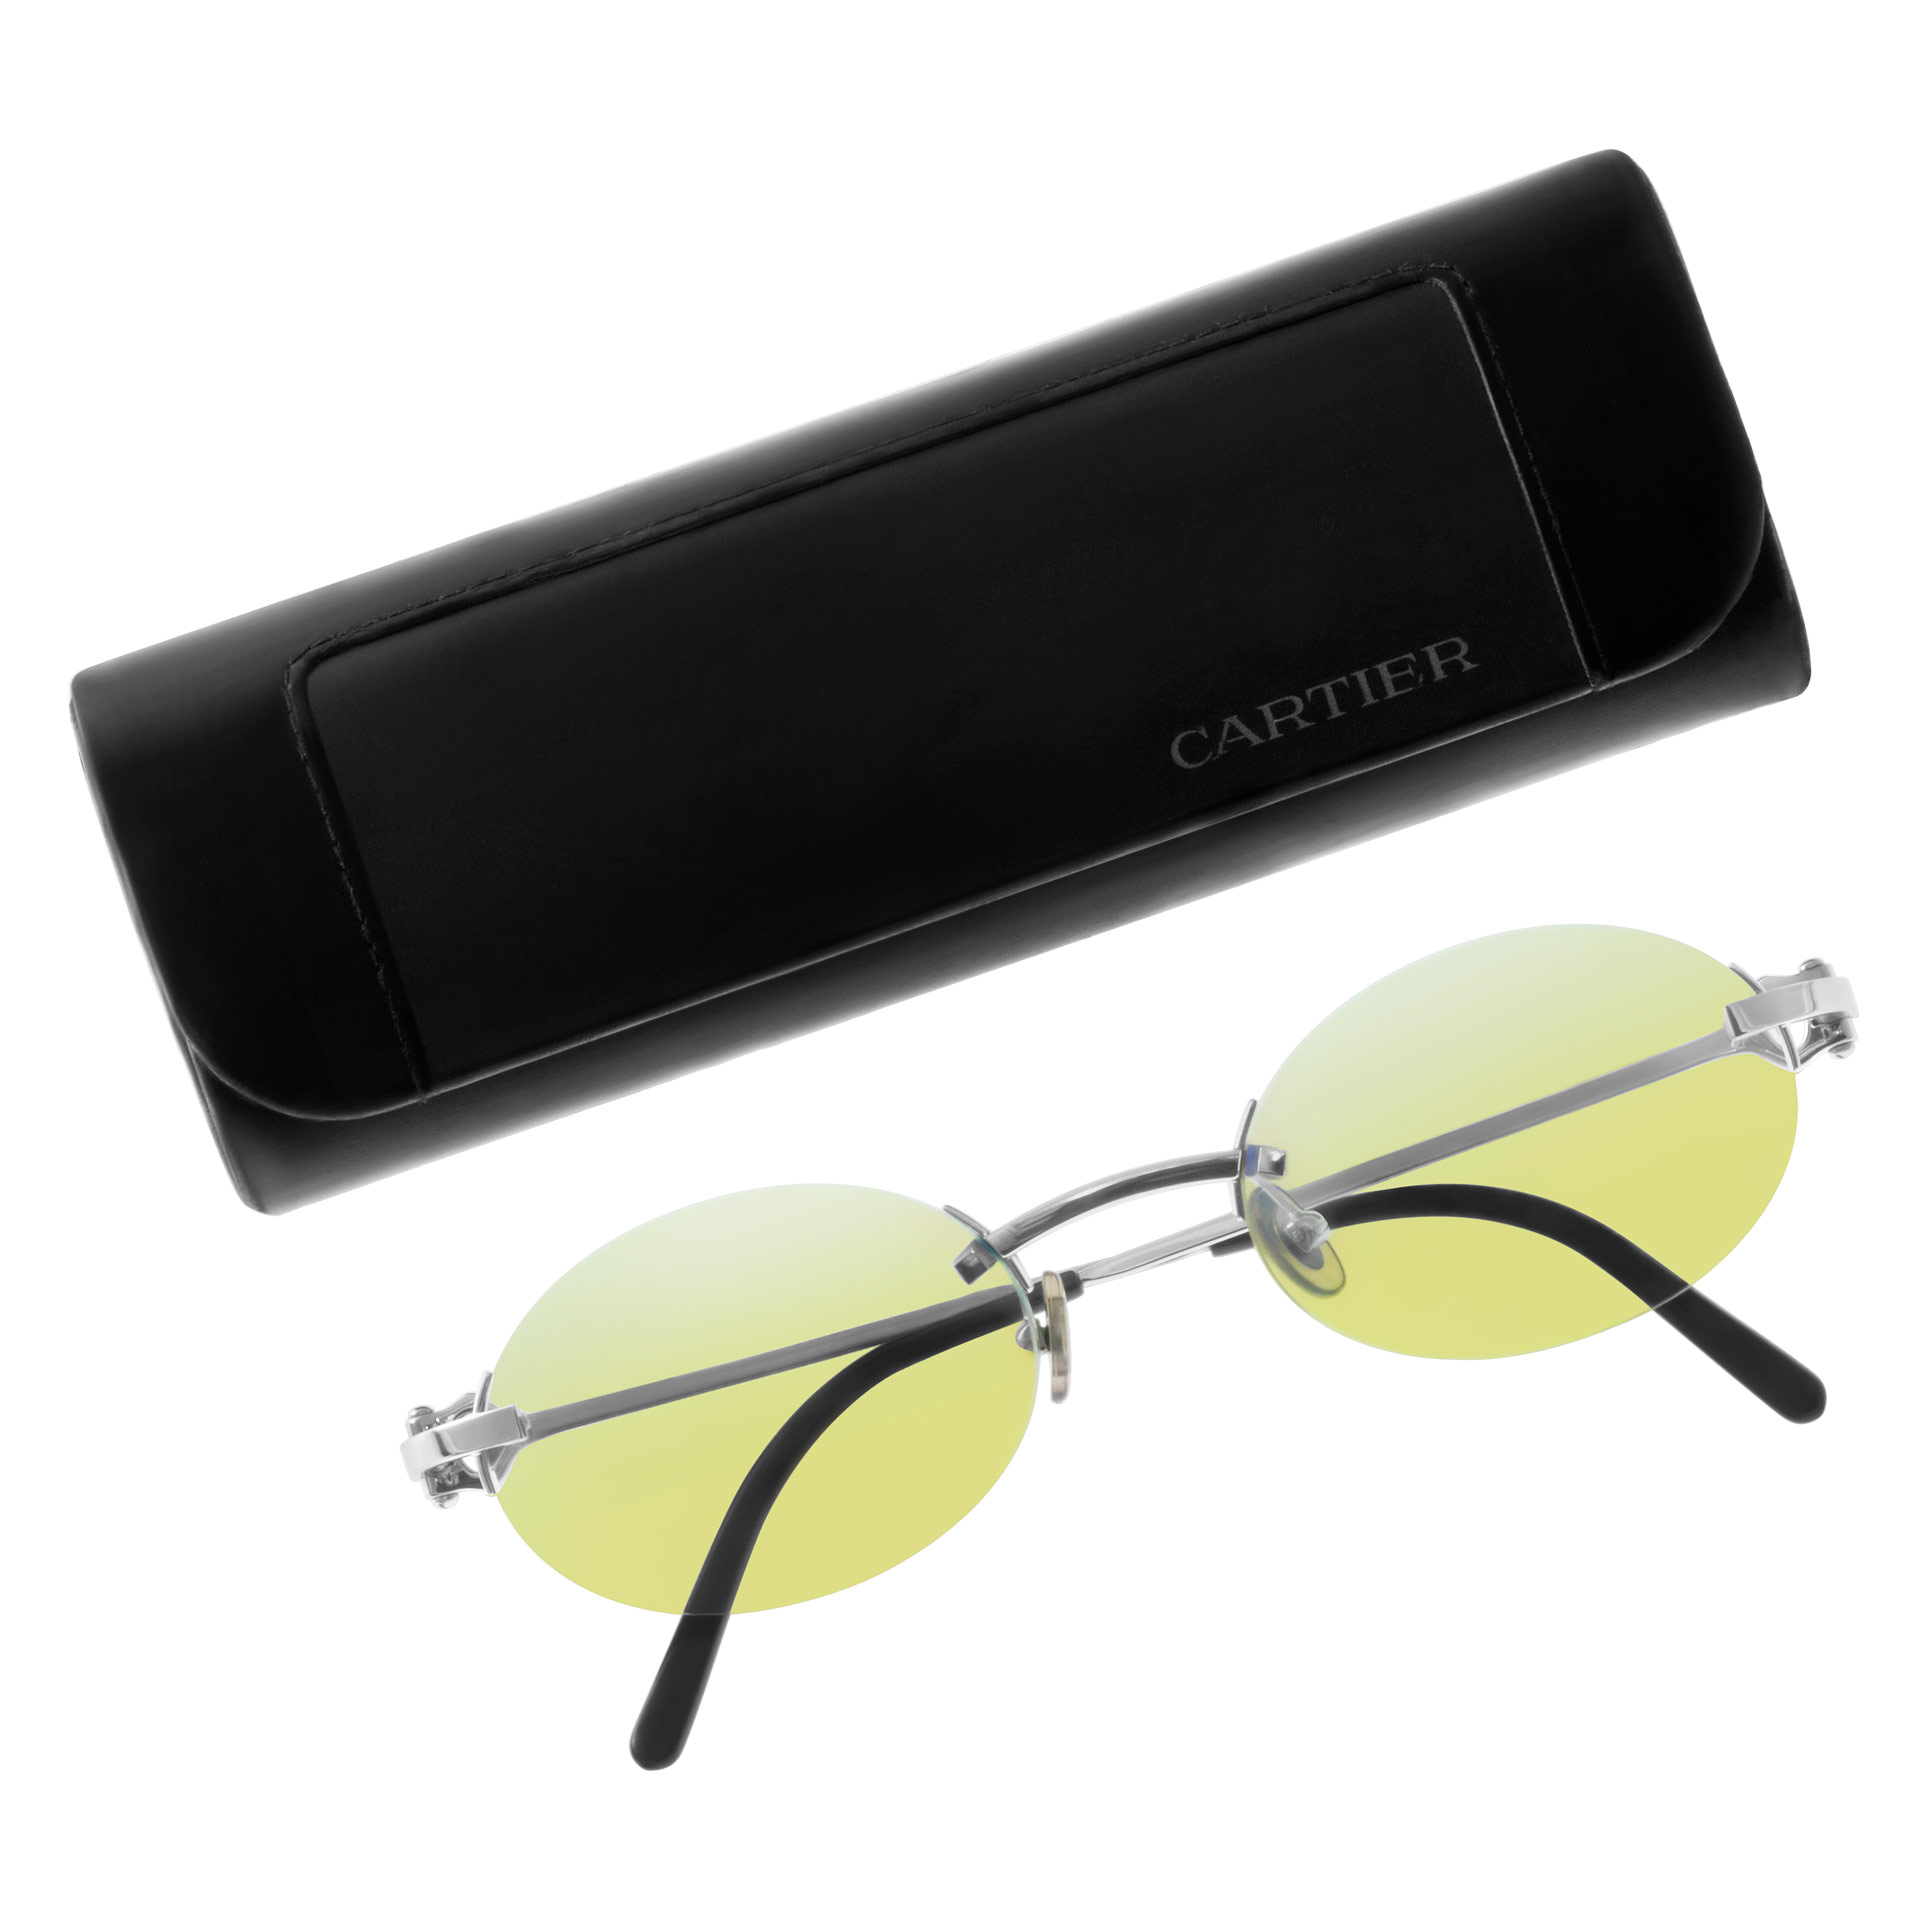 Cartier sunglasses steel frames image 1